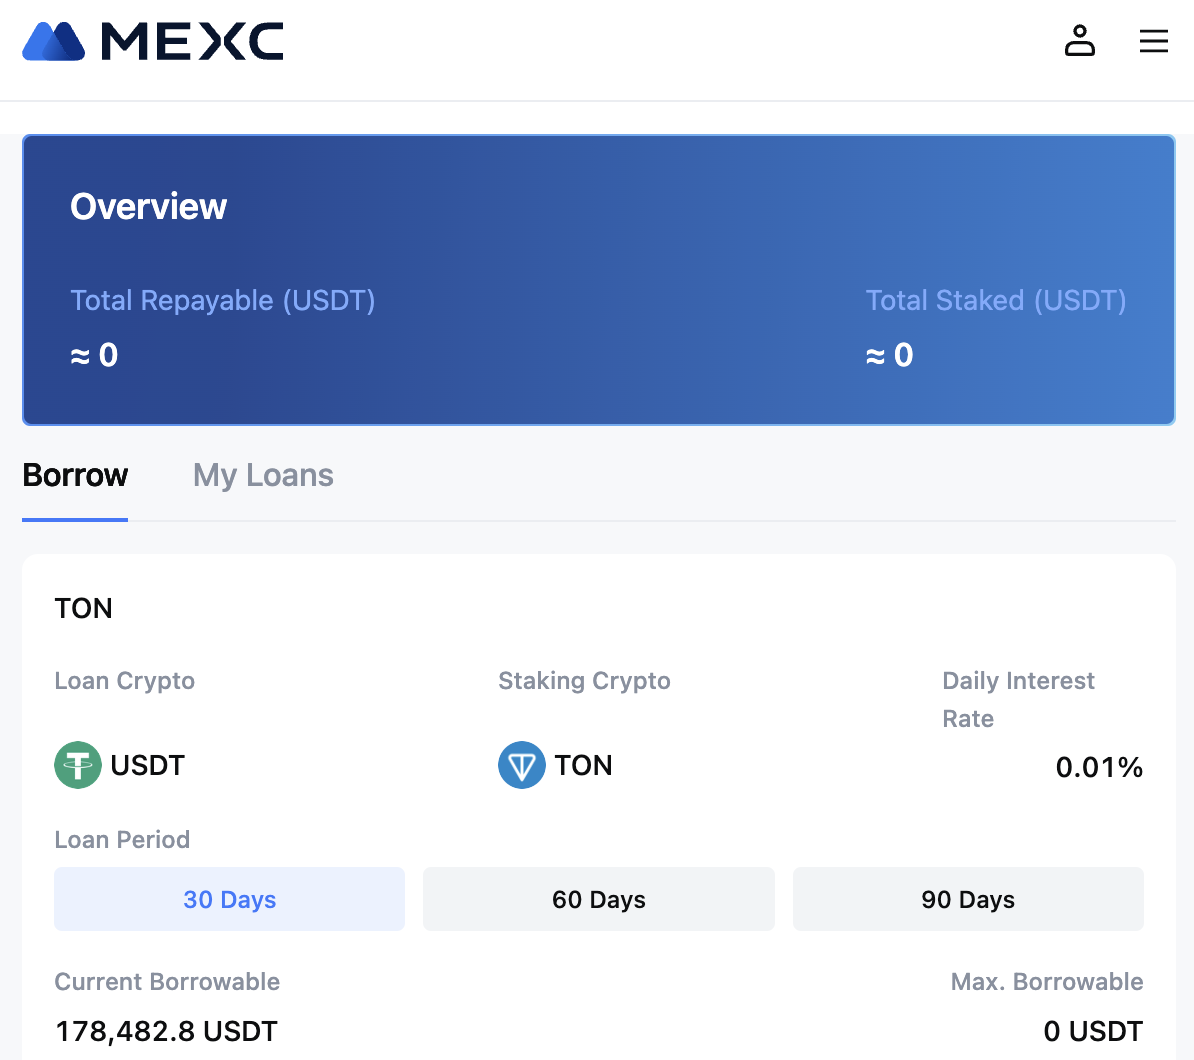 MEXC loans